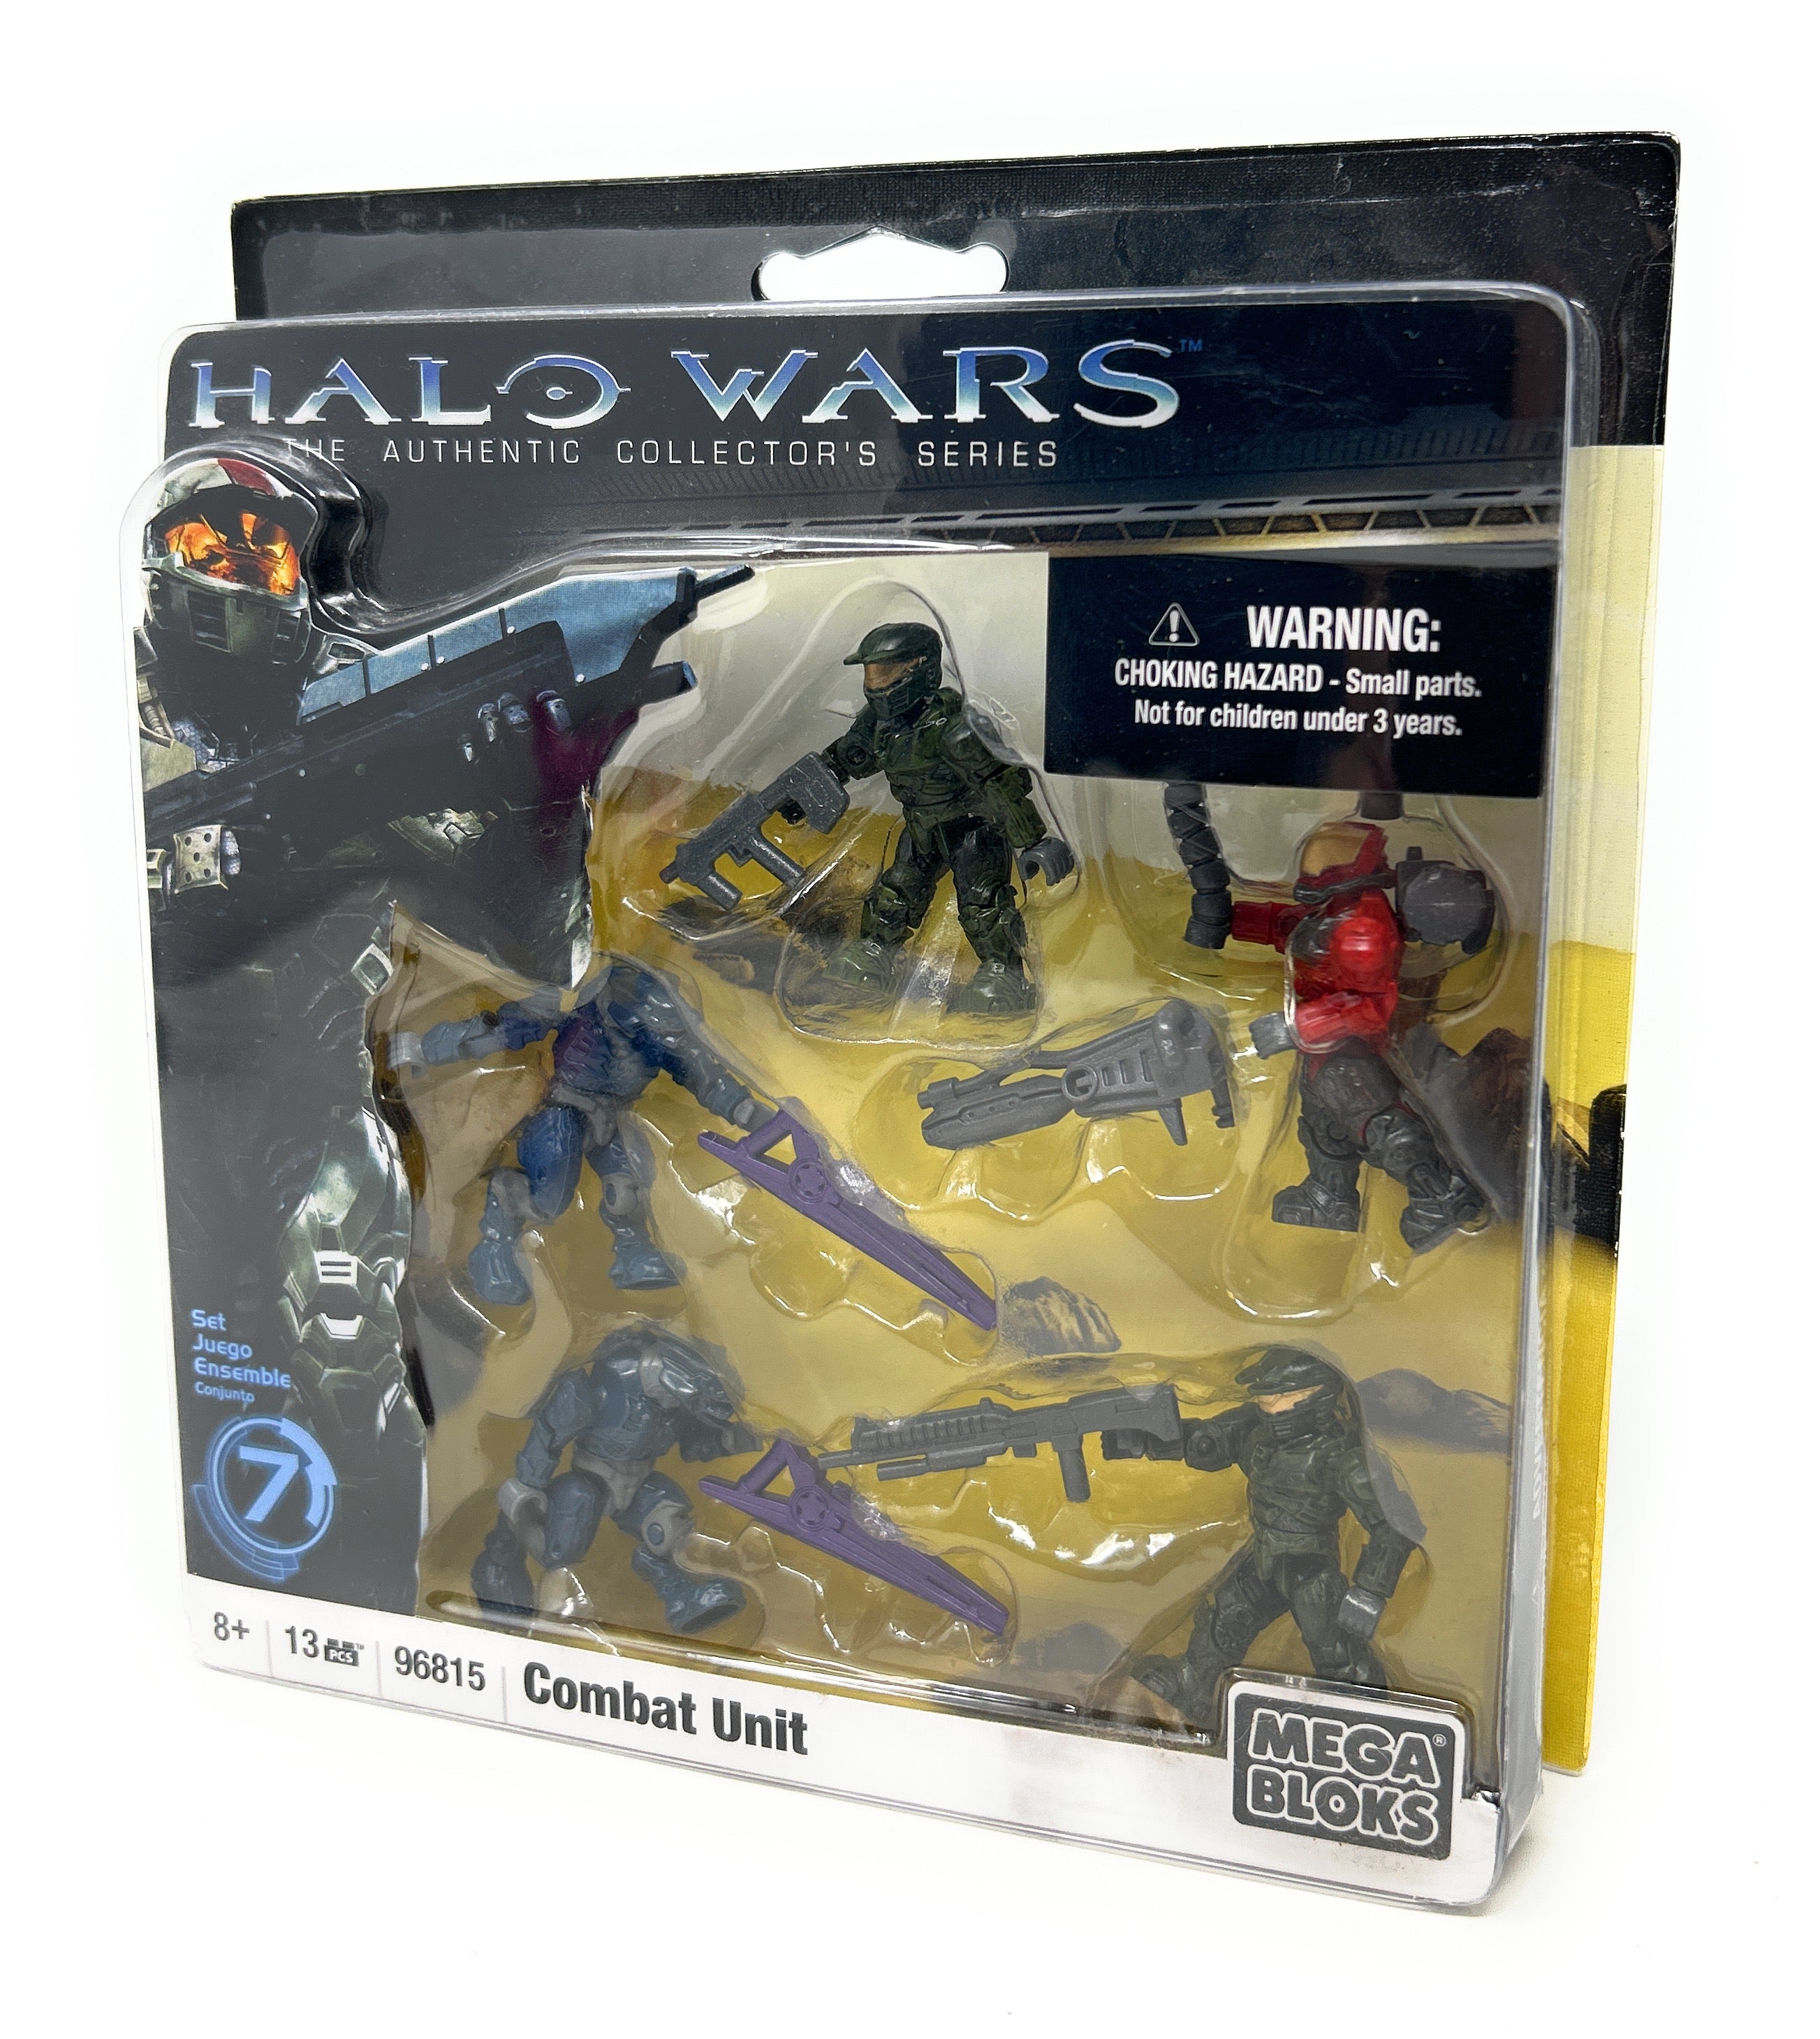 HALO Wars Combat Unit Mega Bloks Set 96815 [RETIRED]